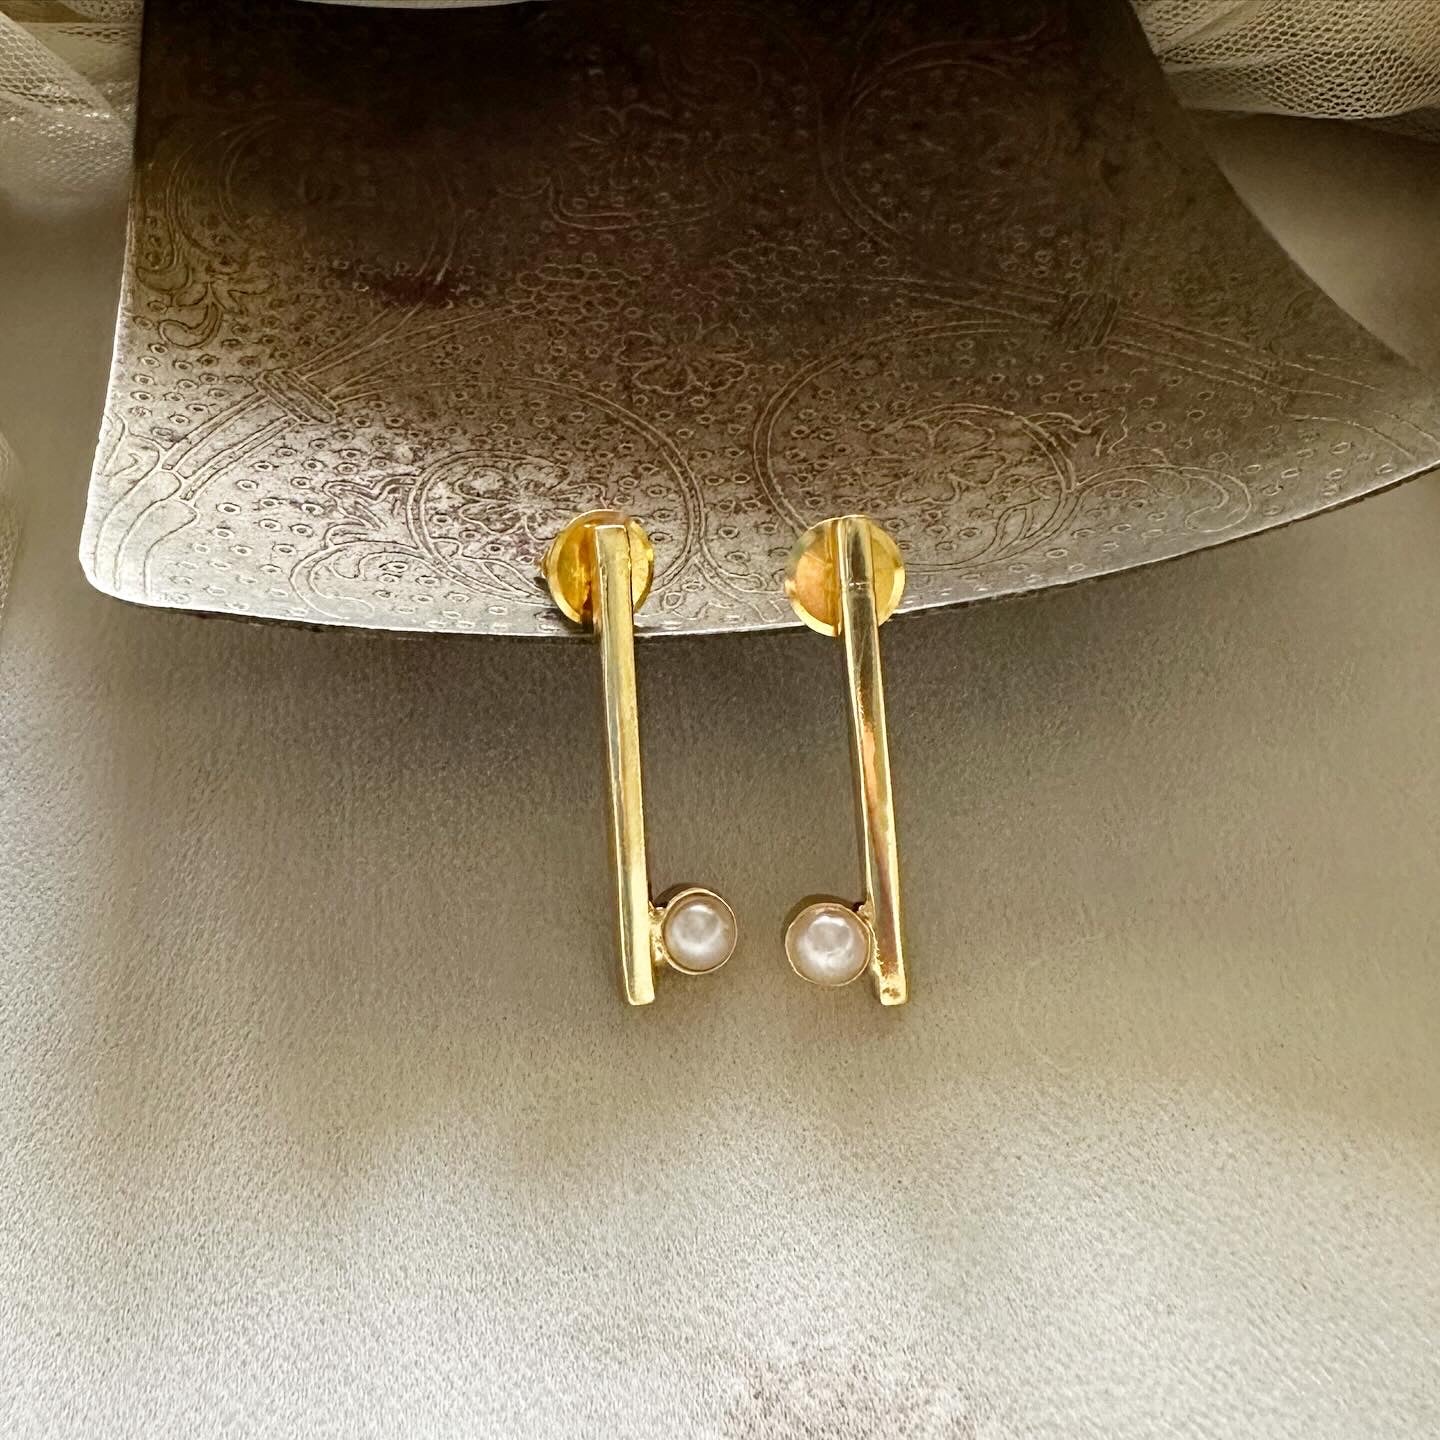 Sleek Line-Pearl dot earrings